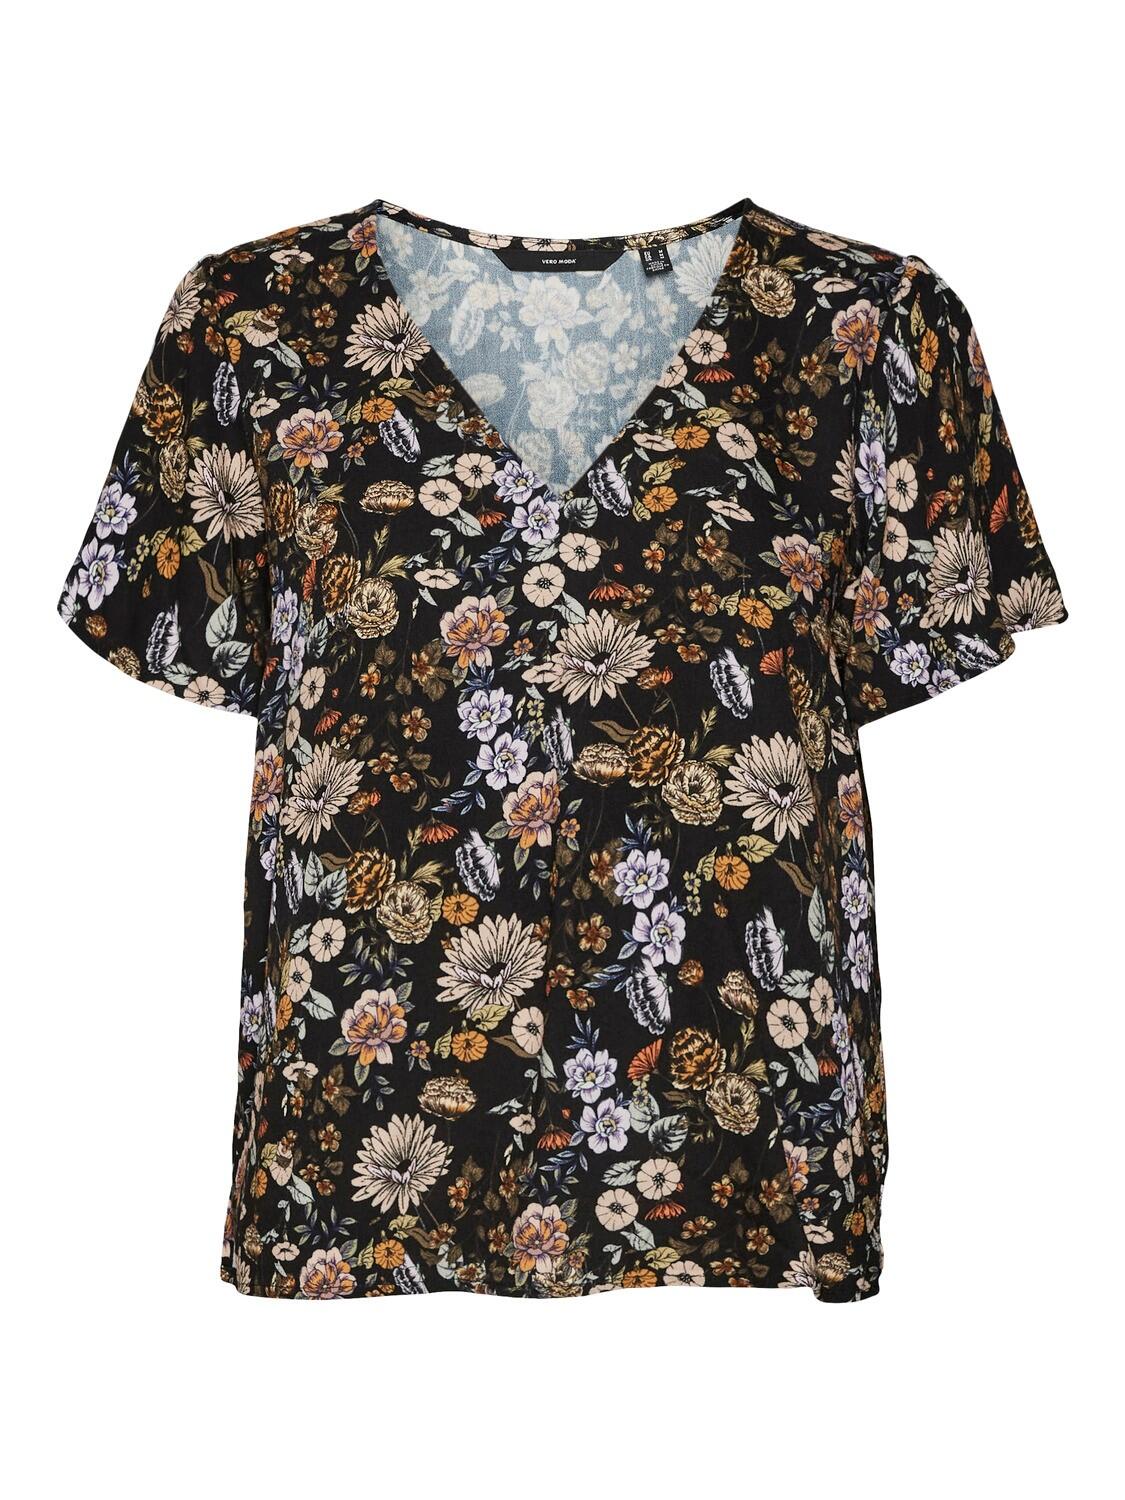 blåhval Aja sektor Sort Vero Moda t-shirt med blomster - 10273316 Pris: 89,98.